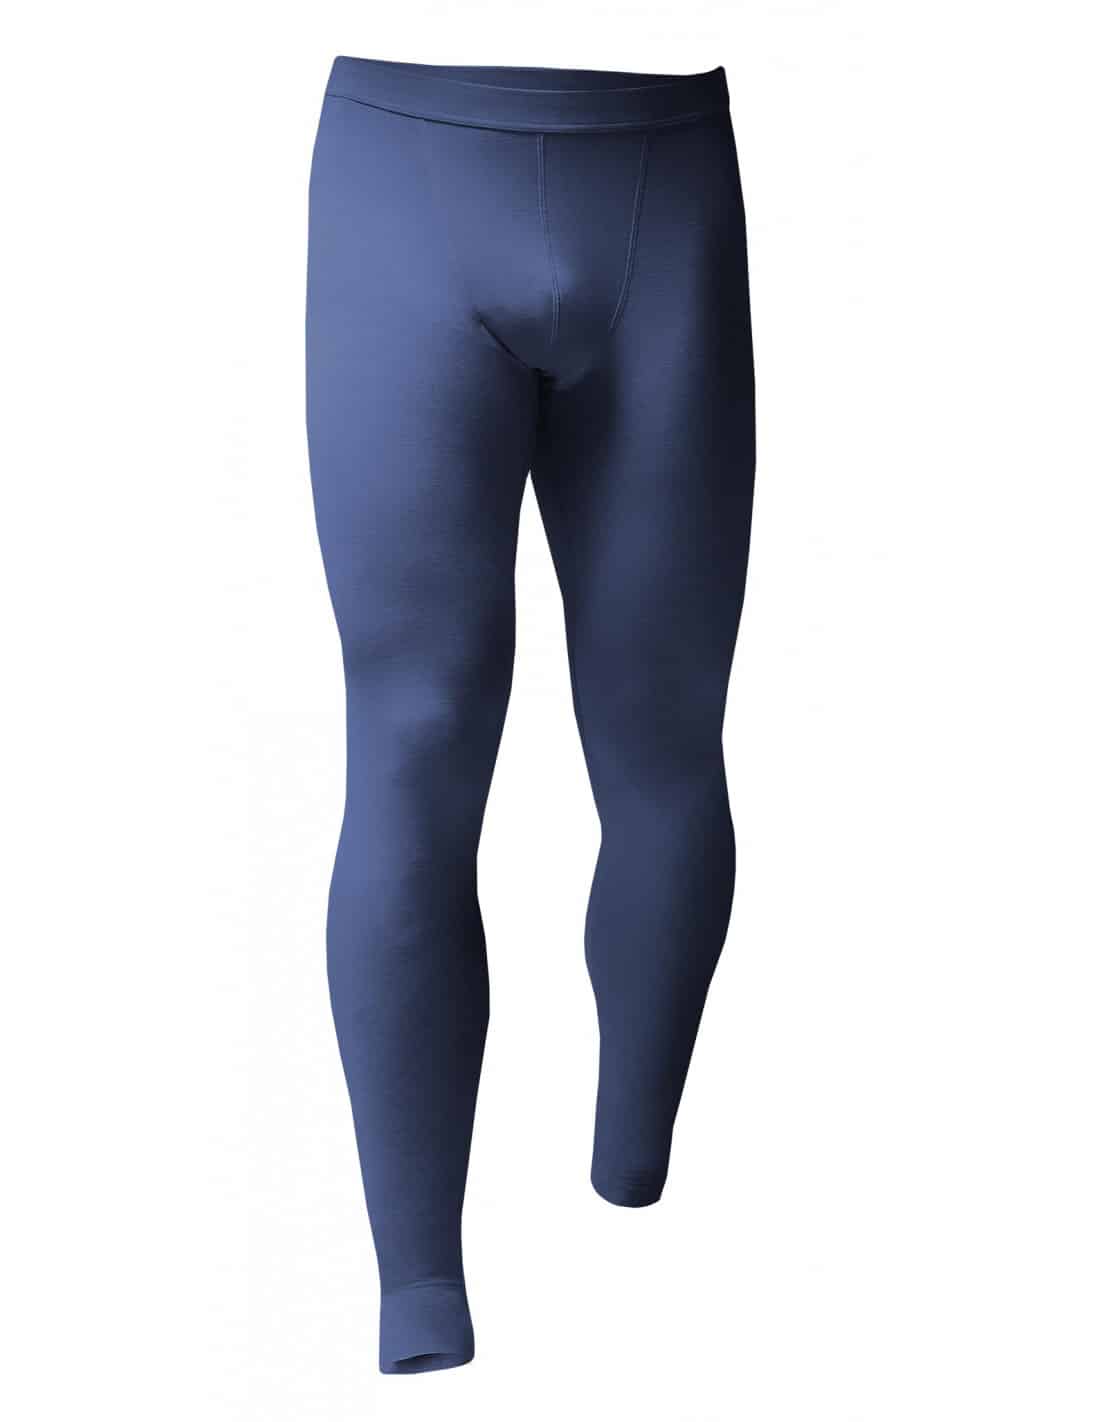 Men's Ultra Lightweight Thermal Leggings -20°C Protection